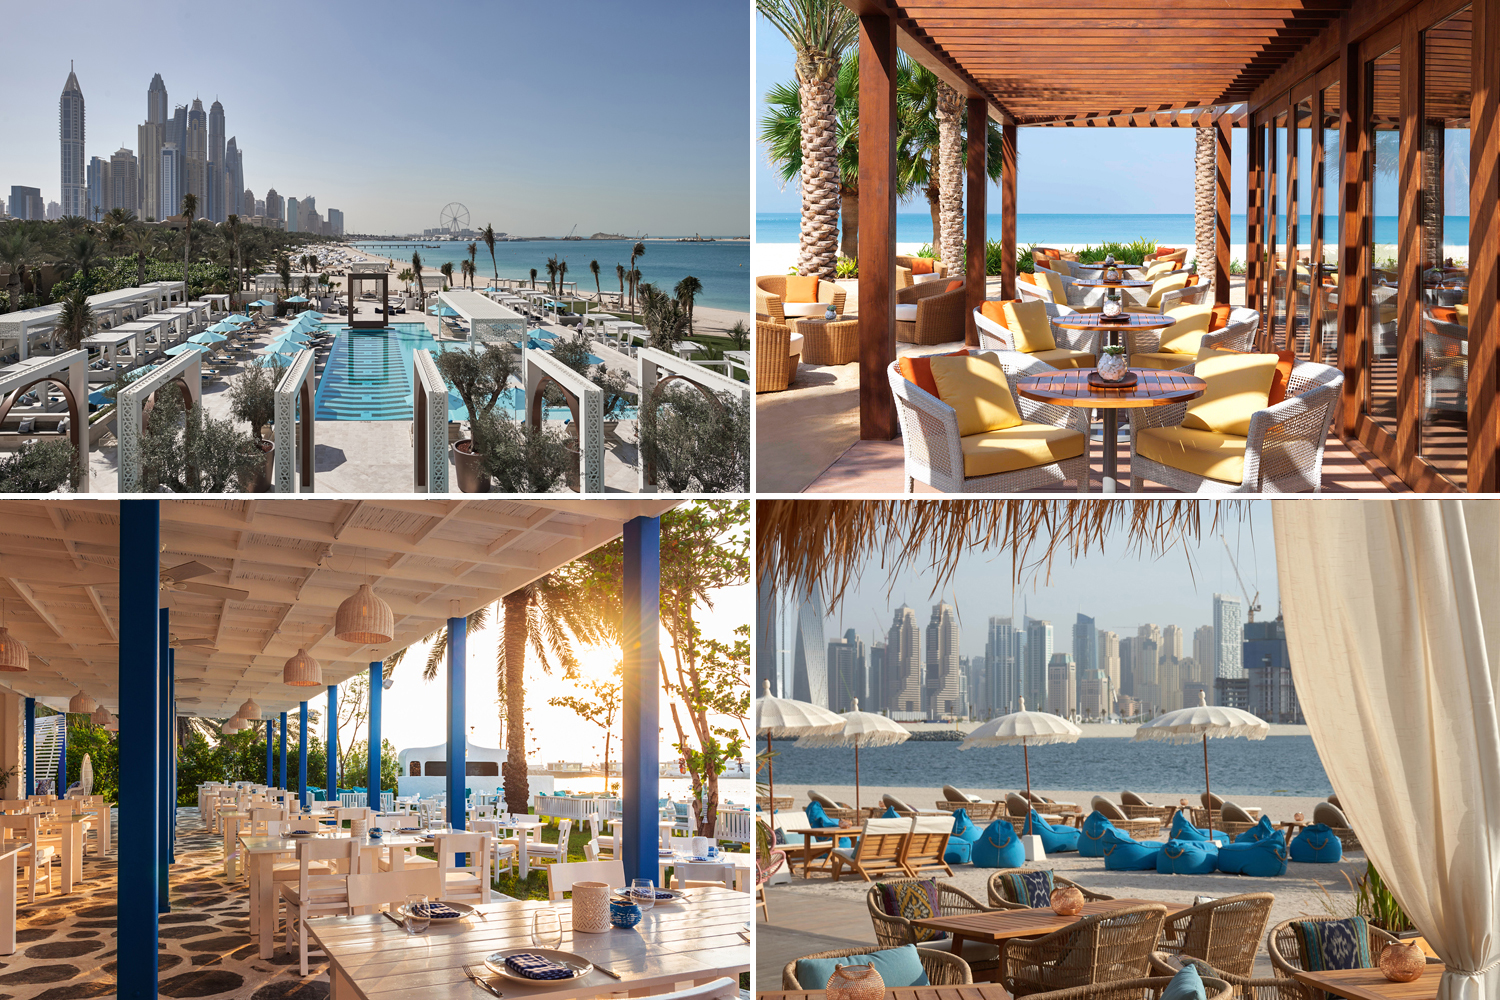 20 of the best beach restaurants in Dubai | Restaurants | Time Out Dubai